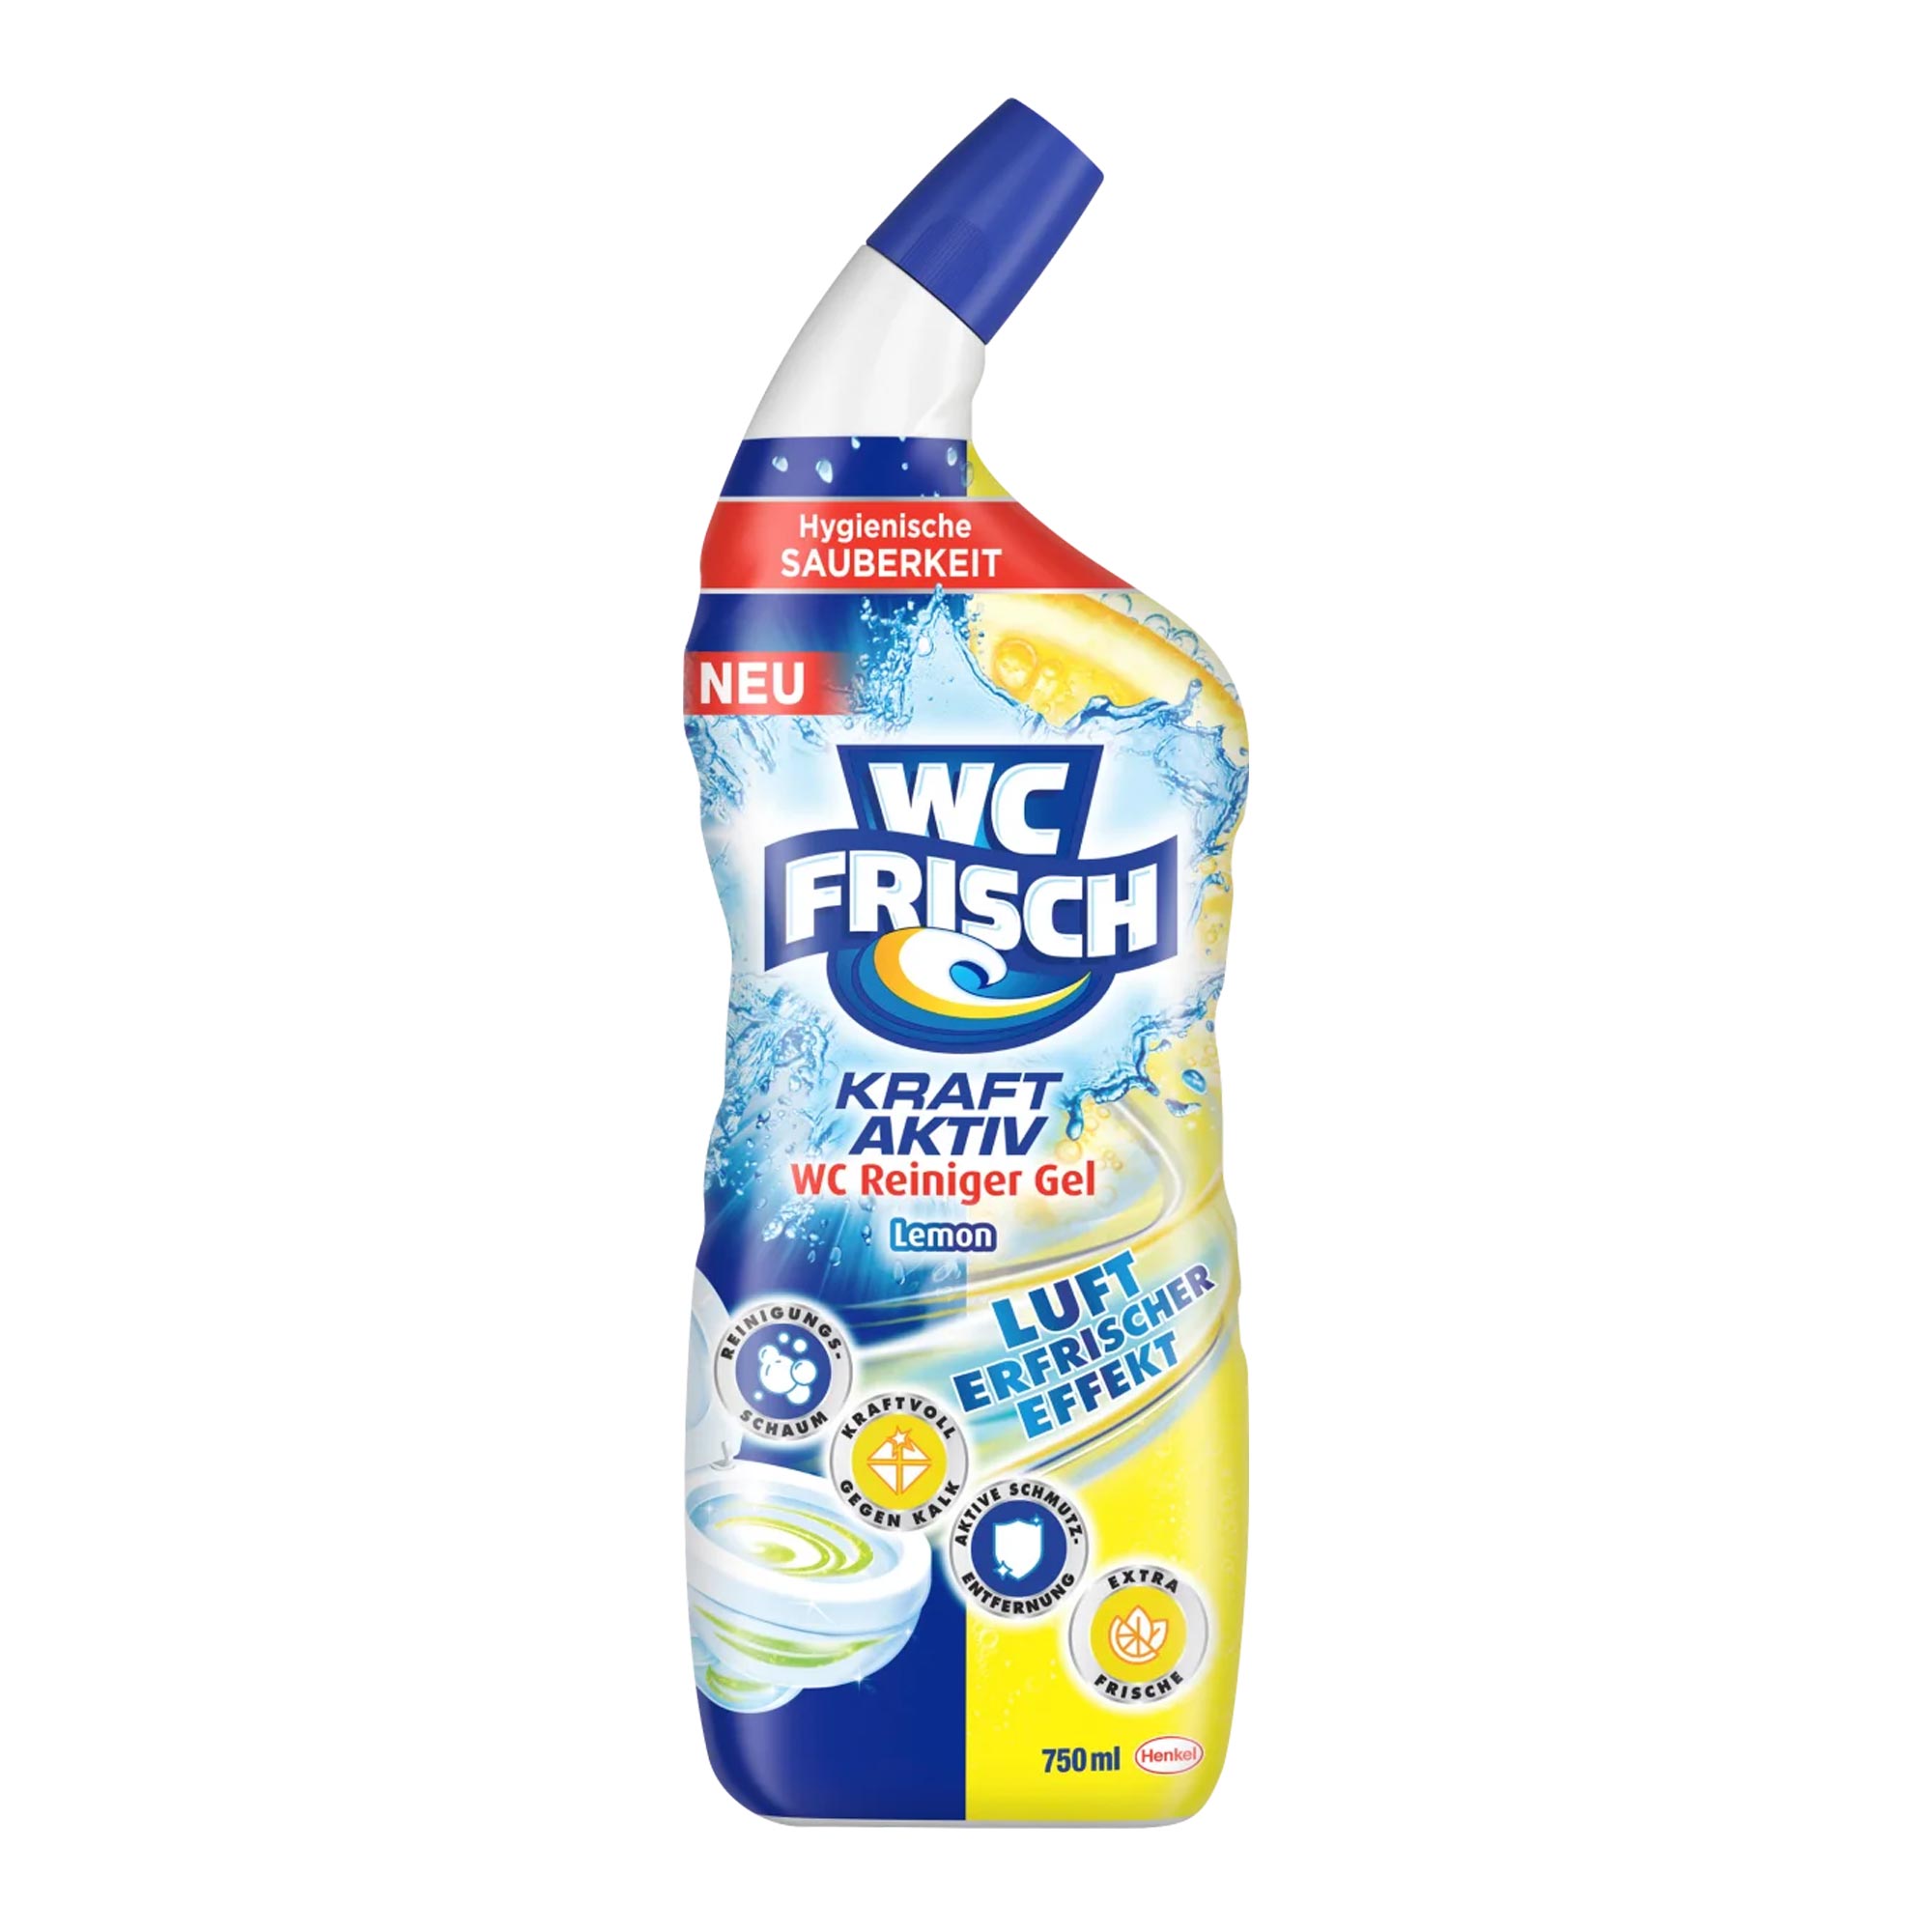 WC Frisch Kraft Aktiv WC-Reiniger Gel Lemon